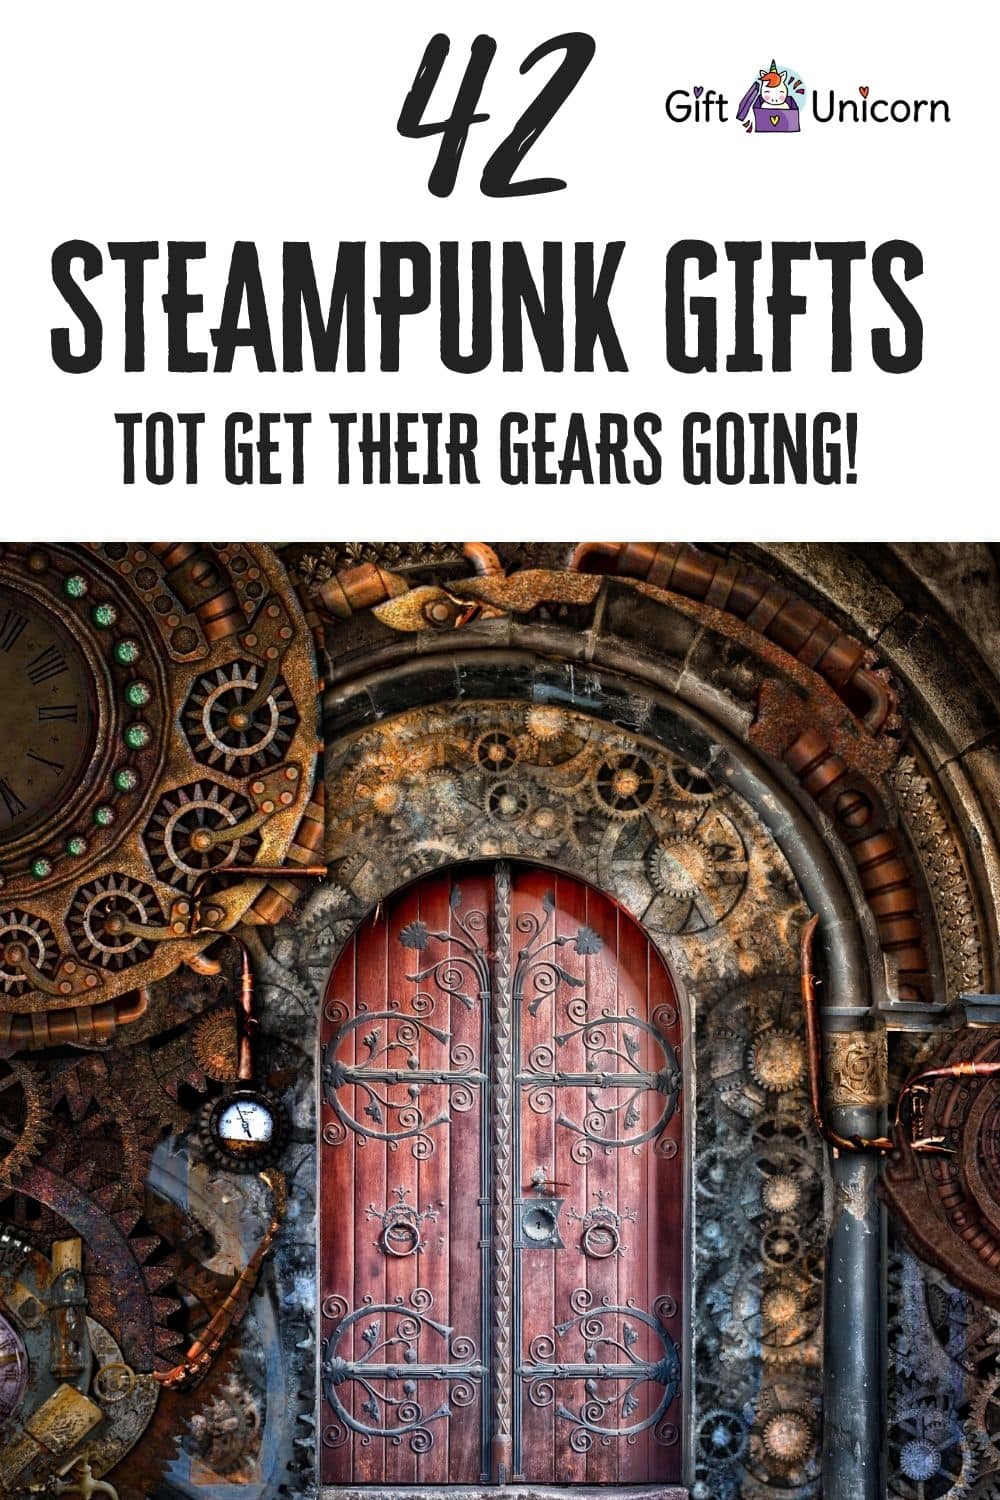 42 Steampunk gifts pin image